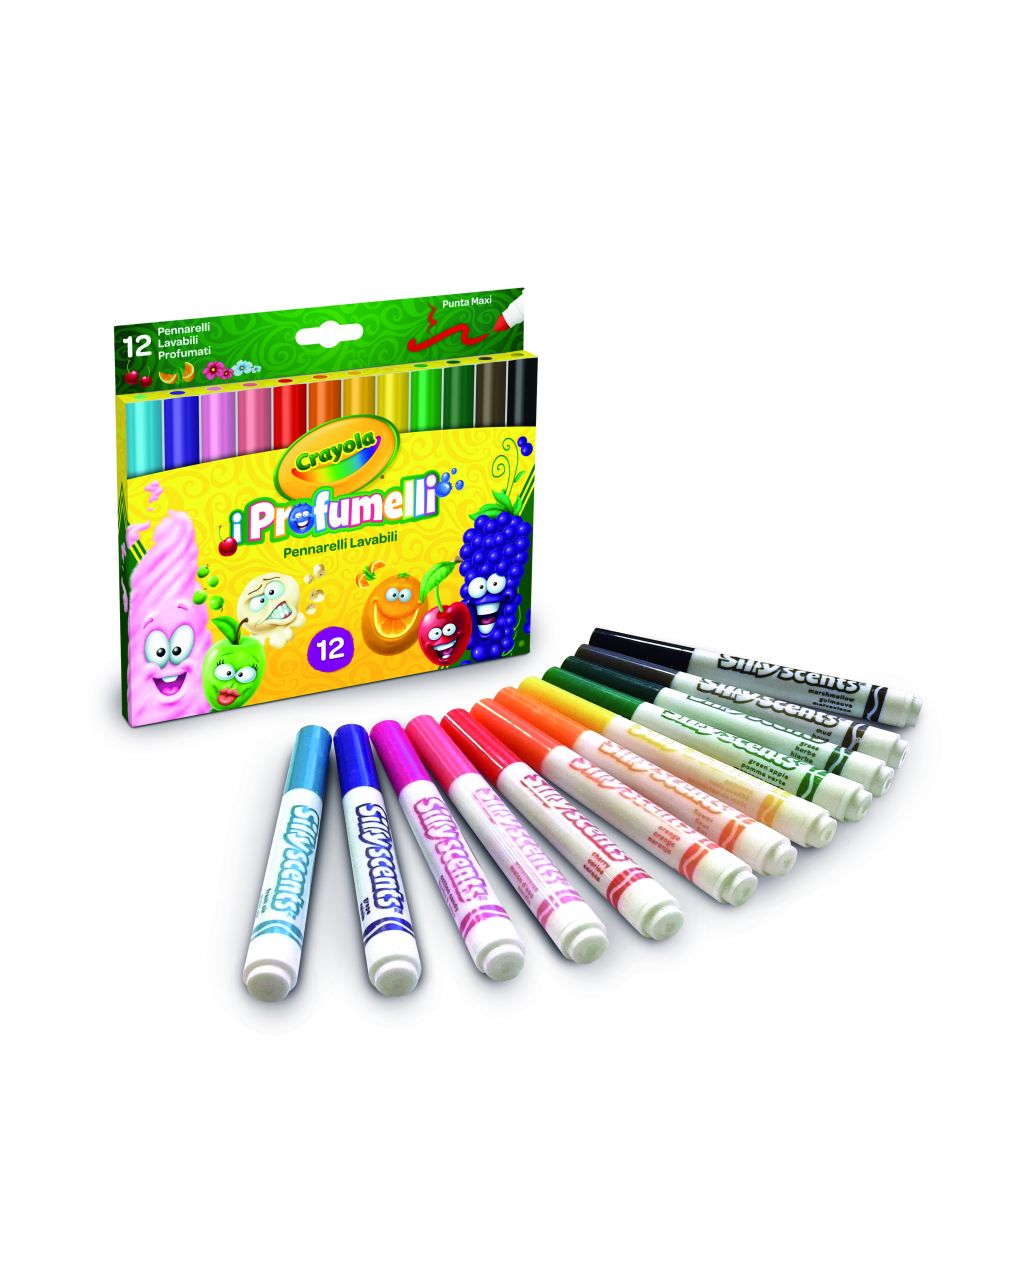 Crayola - 12 marcadores perfumados de ponta maxi laváveis - Crayola